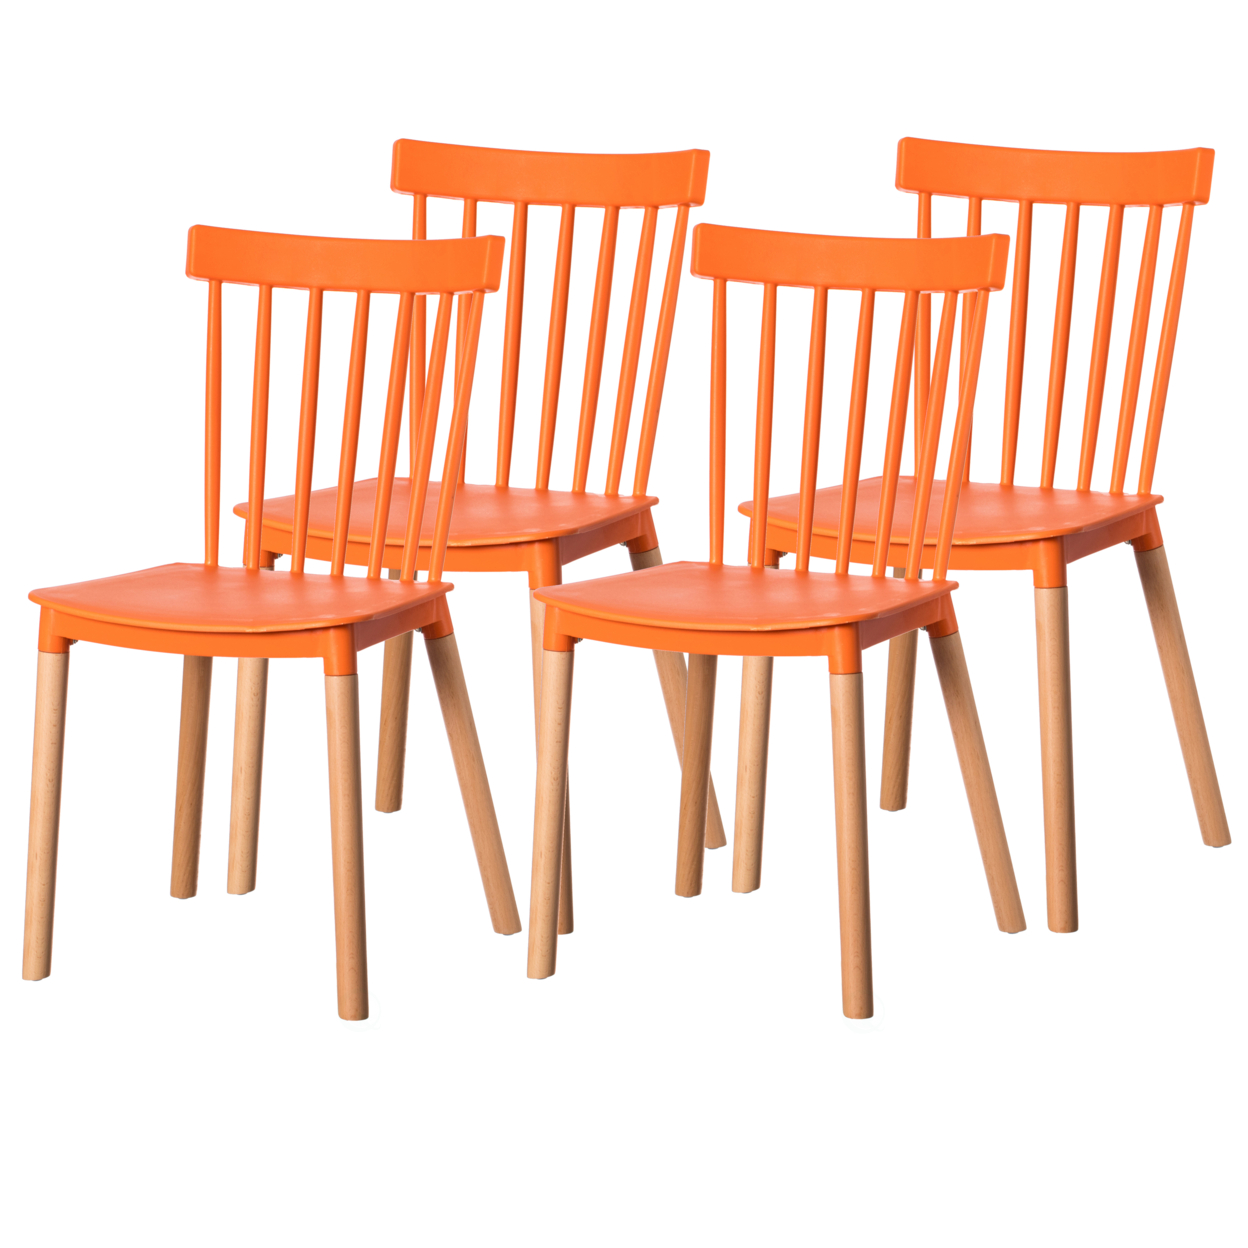 Modern Plastic Dining Chair Windsor Design With Beech Wood Legs - Set Of 4 Orange